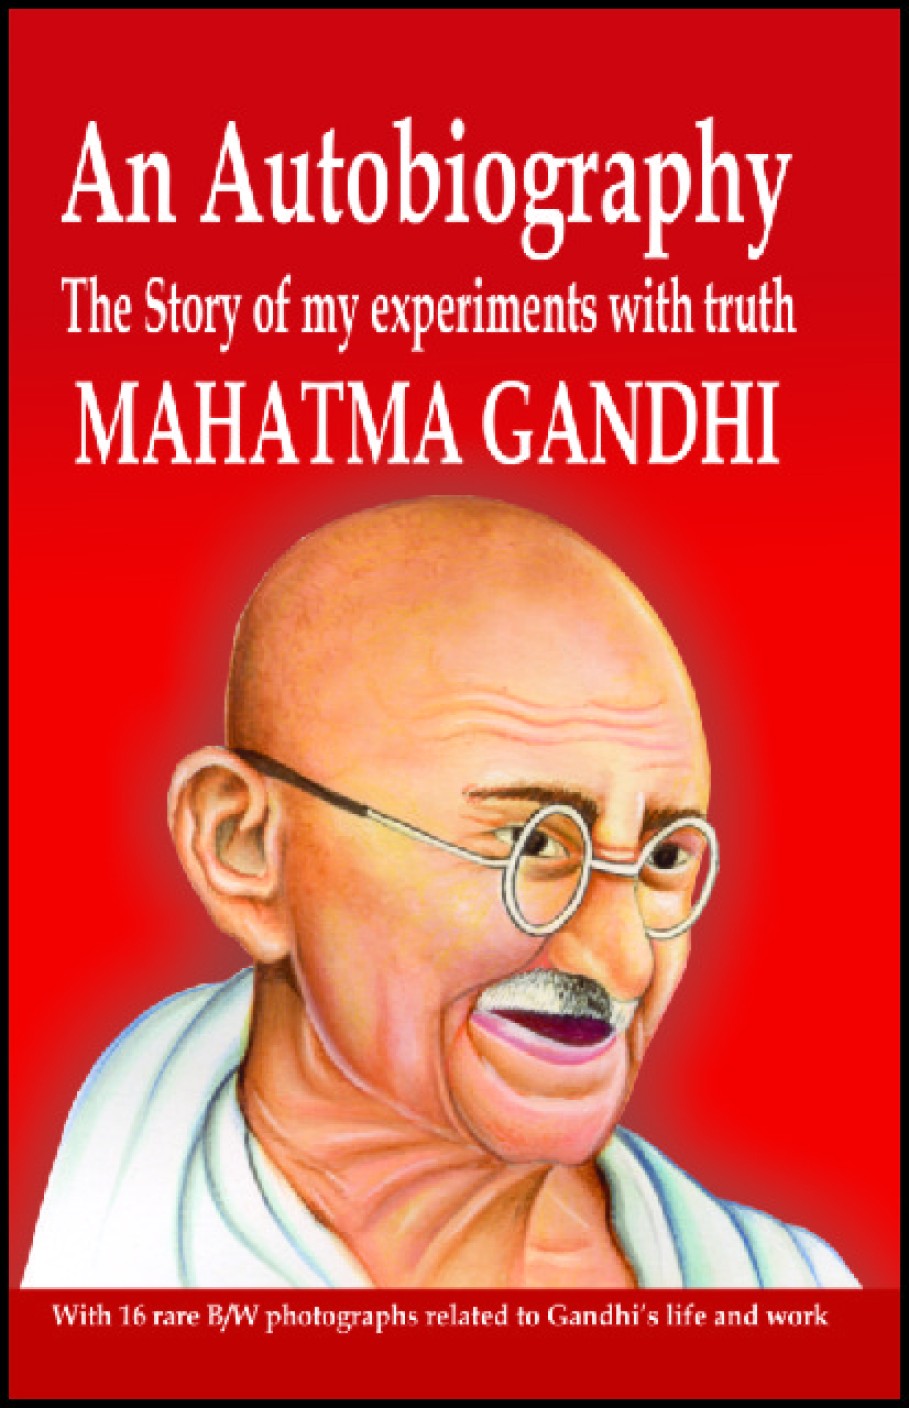 autobiography book of mahatma gandhi